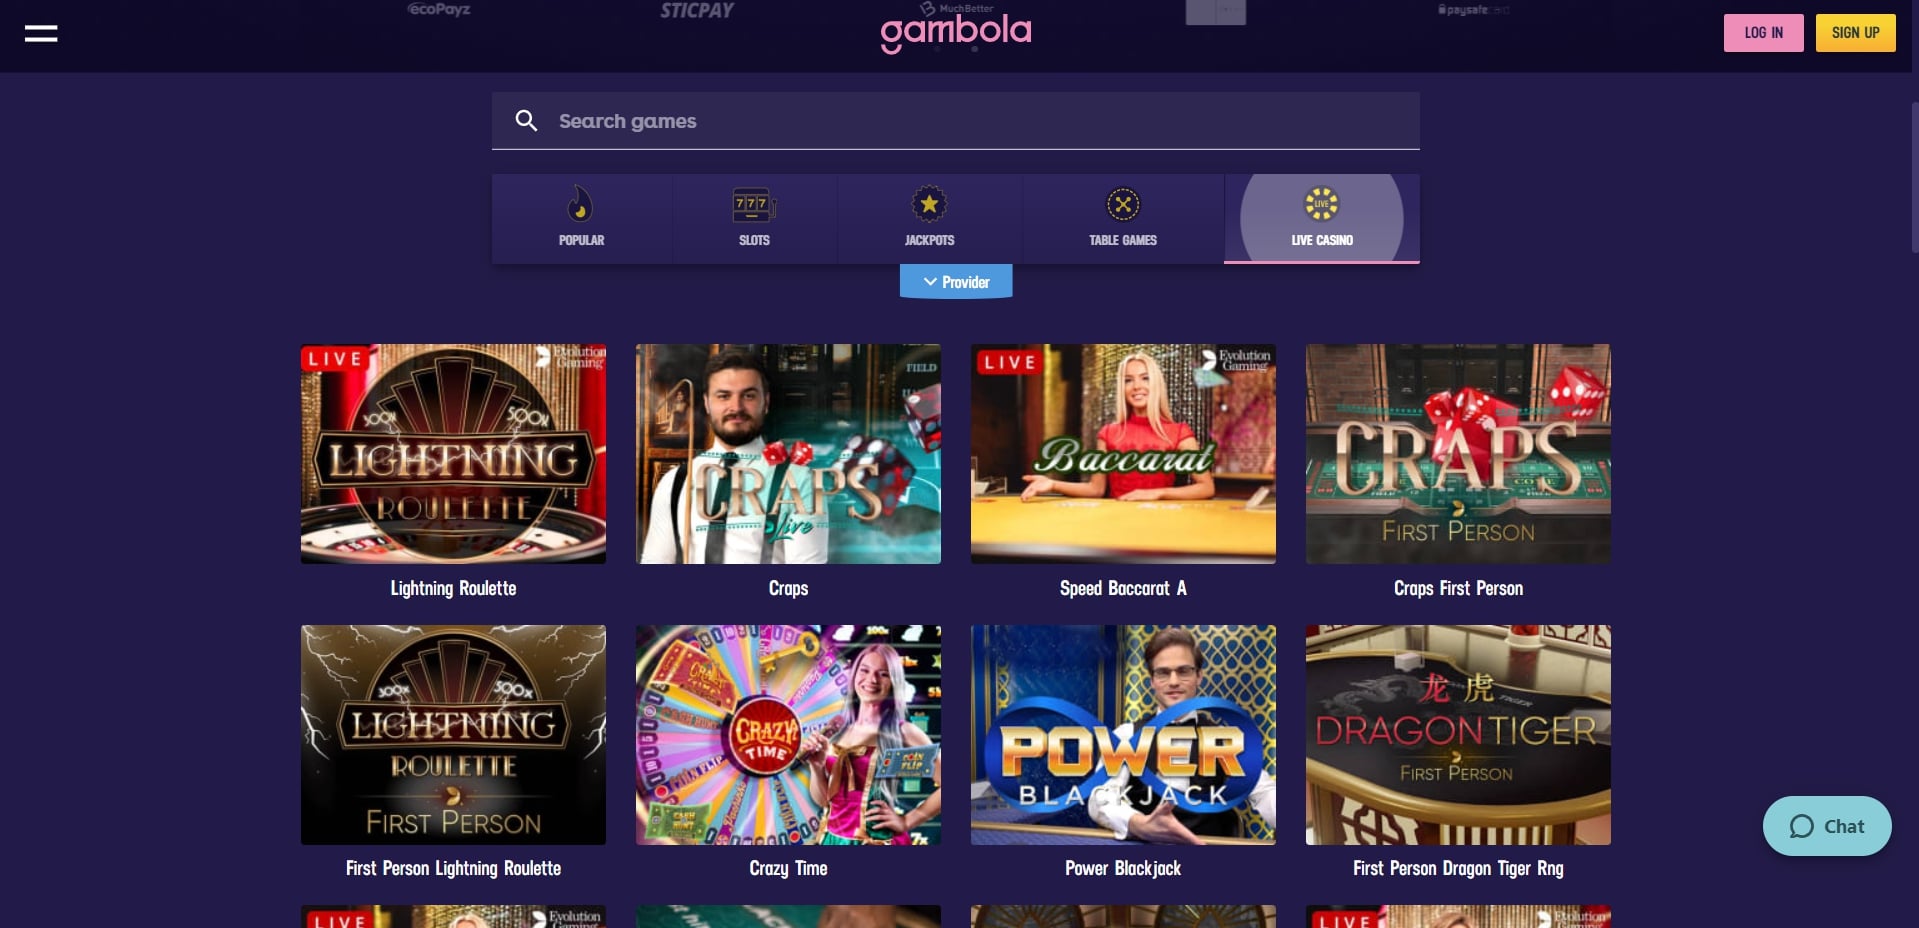 Gambola Casino Live Dealer Games